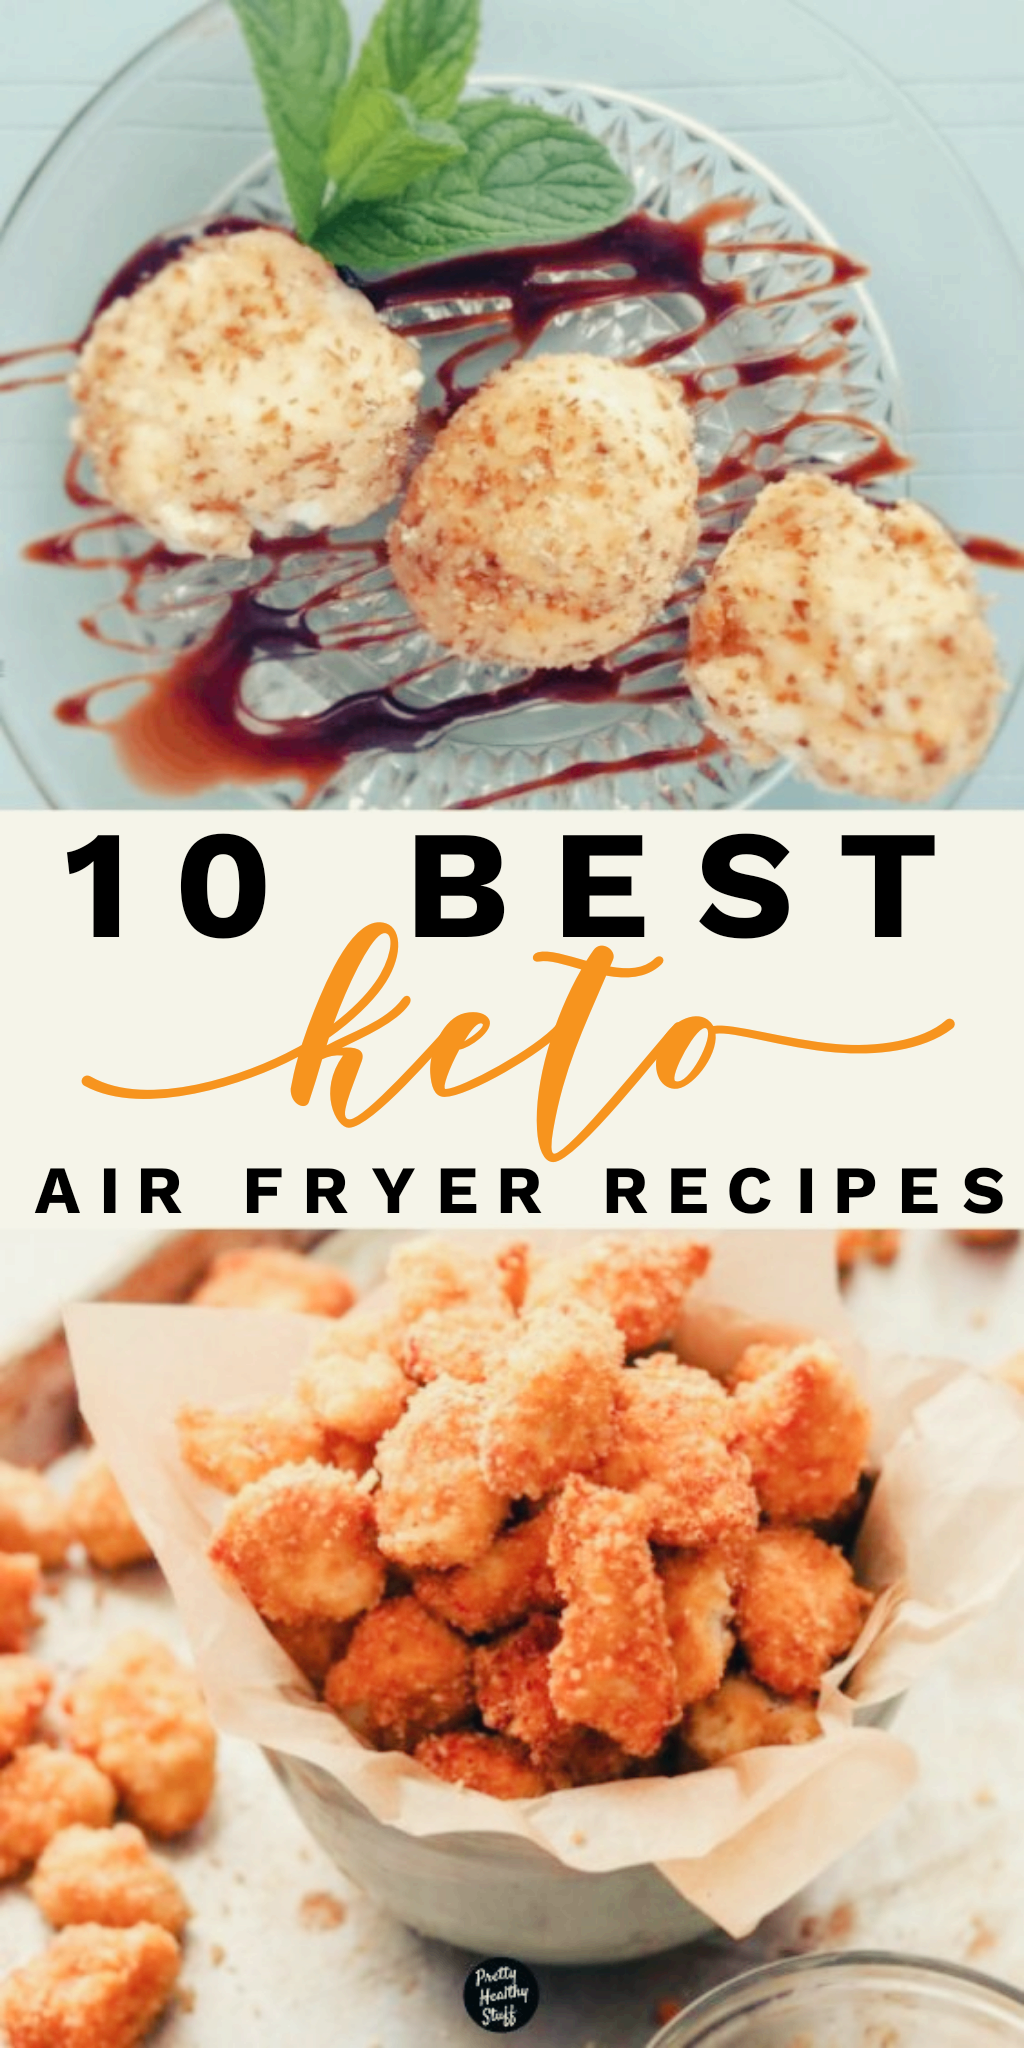 Top 10 Best Keto Air Fryer Recipes -   19 air fryer recipes healthy low sodium ideas